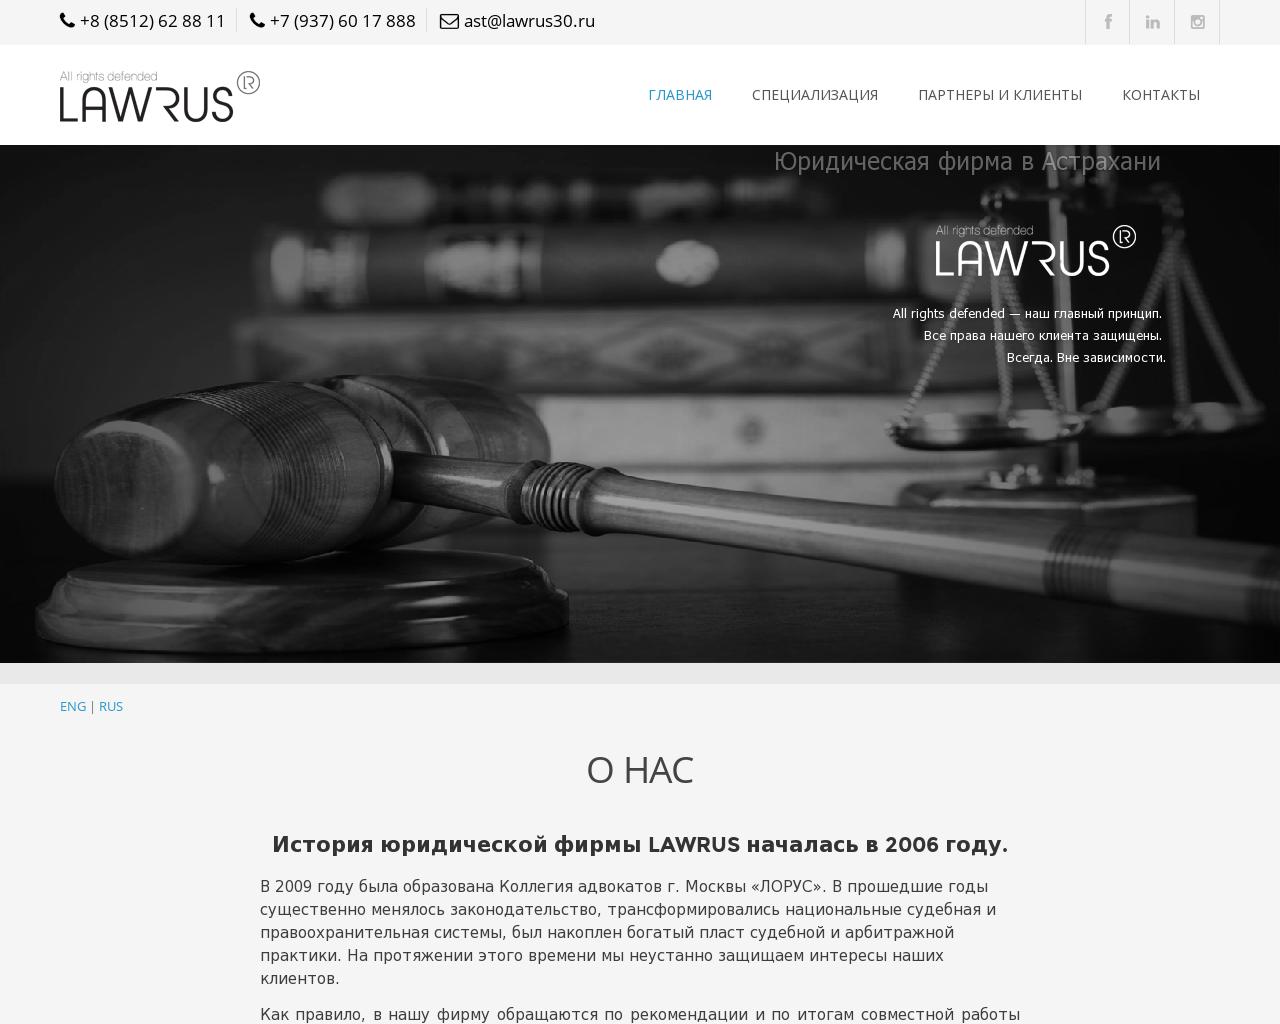 Изображение сайта юрист-услуги.рф в разрешении 1280x1024